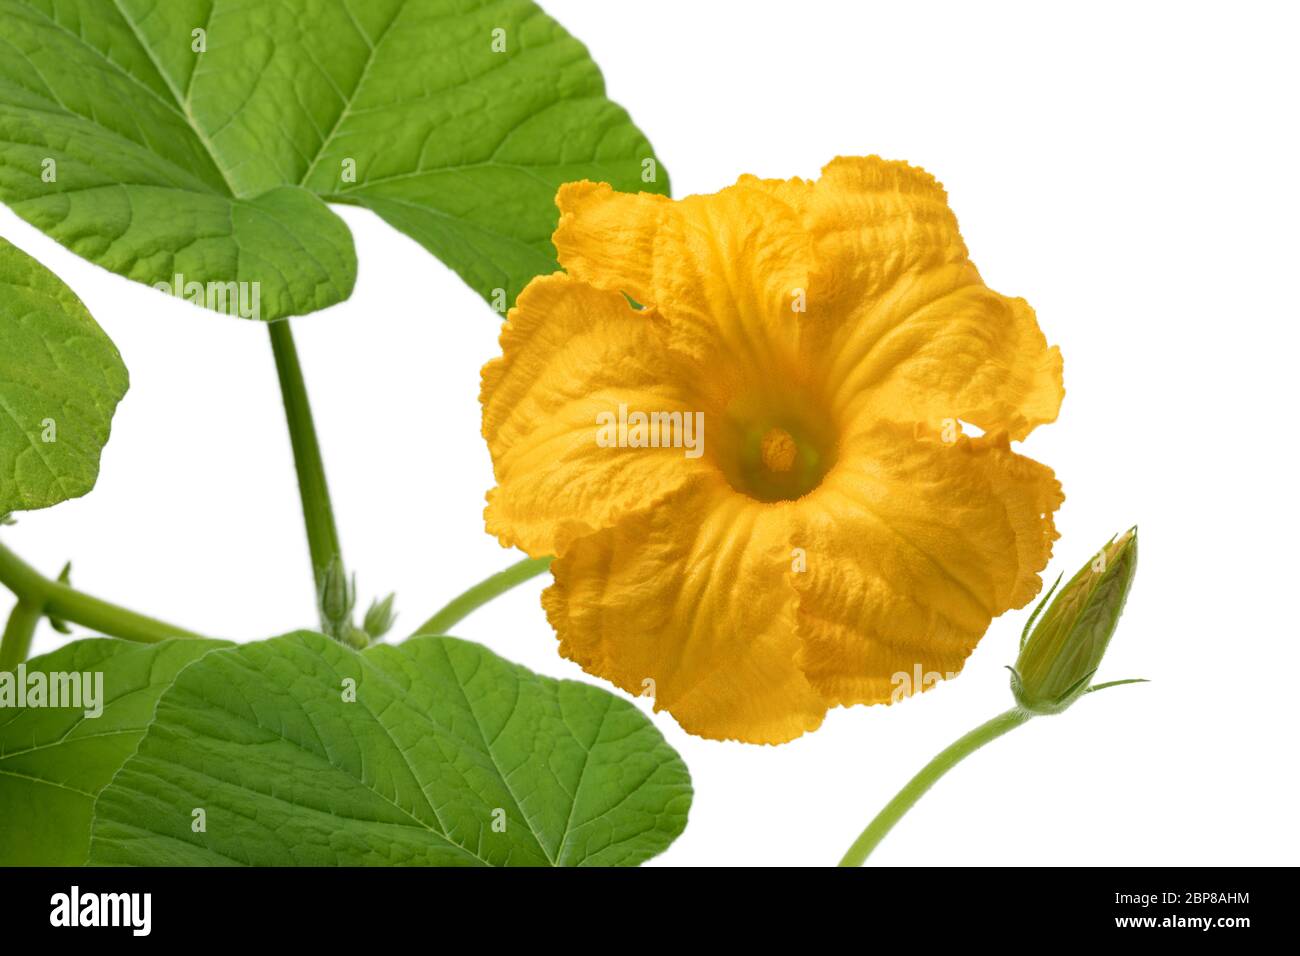 Flor de calabaza amarilla fresca, cucurbita maxima, de cerca sobre fondo blanco Foto de stock